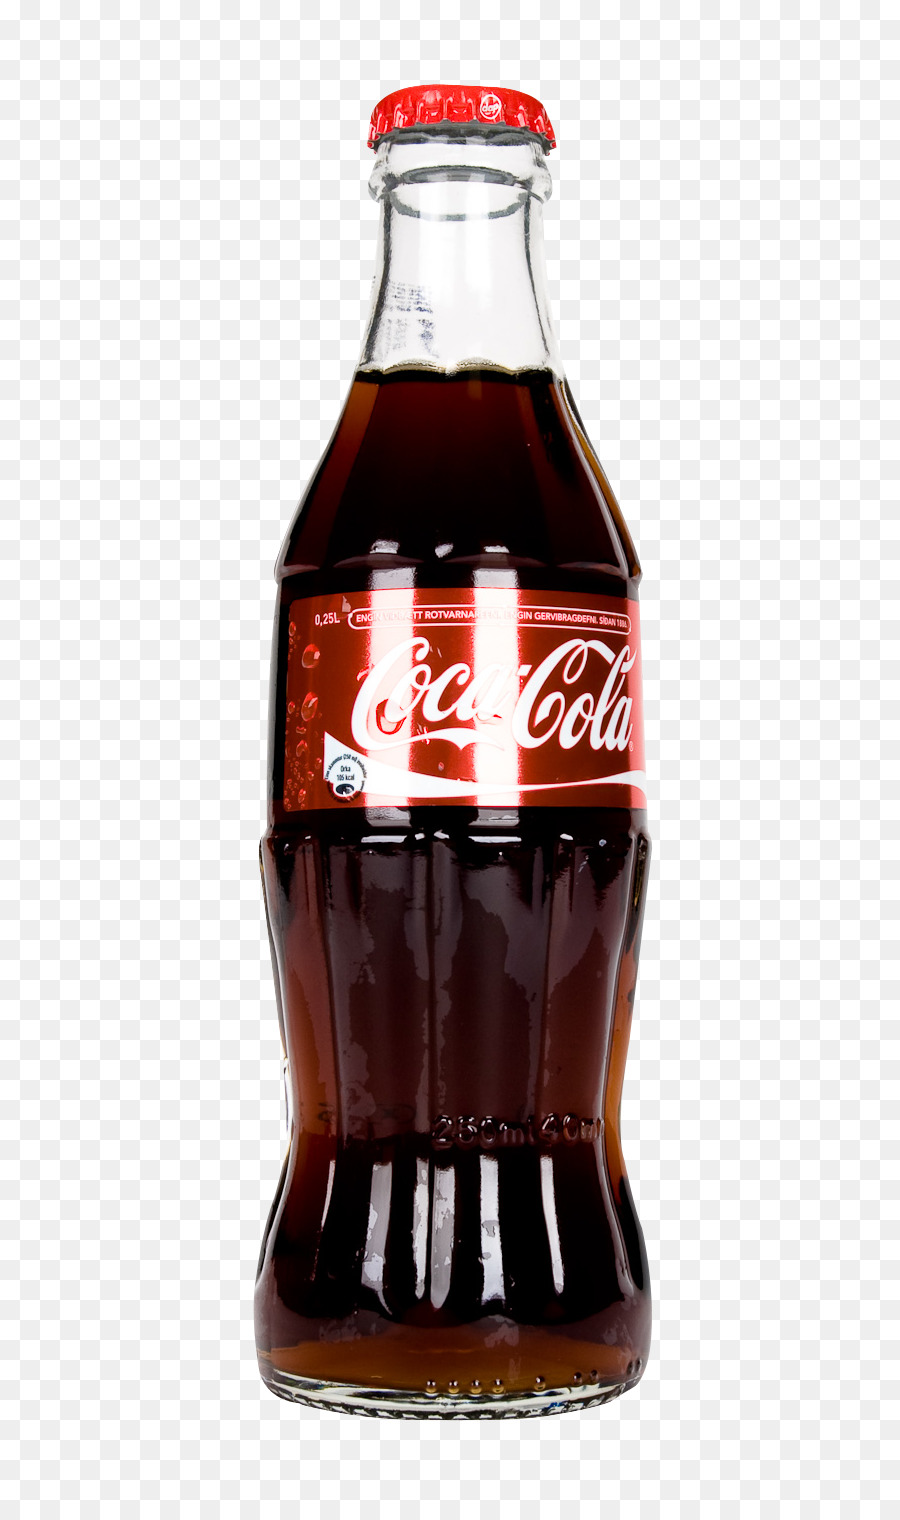 Coca-Cola Soft drink Beer - Coca Cola Bottle png download - 805*1506 - Free Transparent Coca Cola png Download.